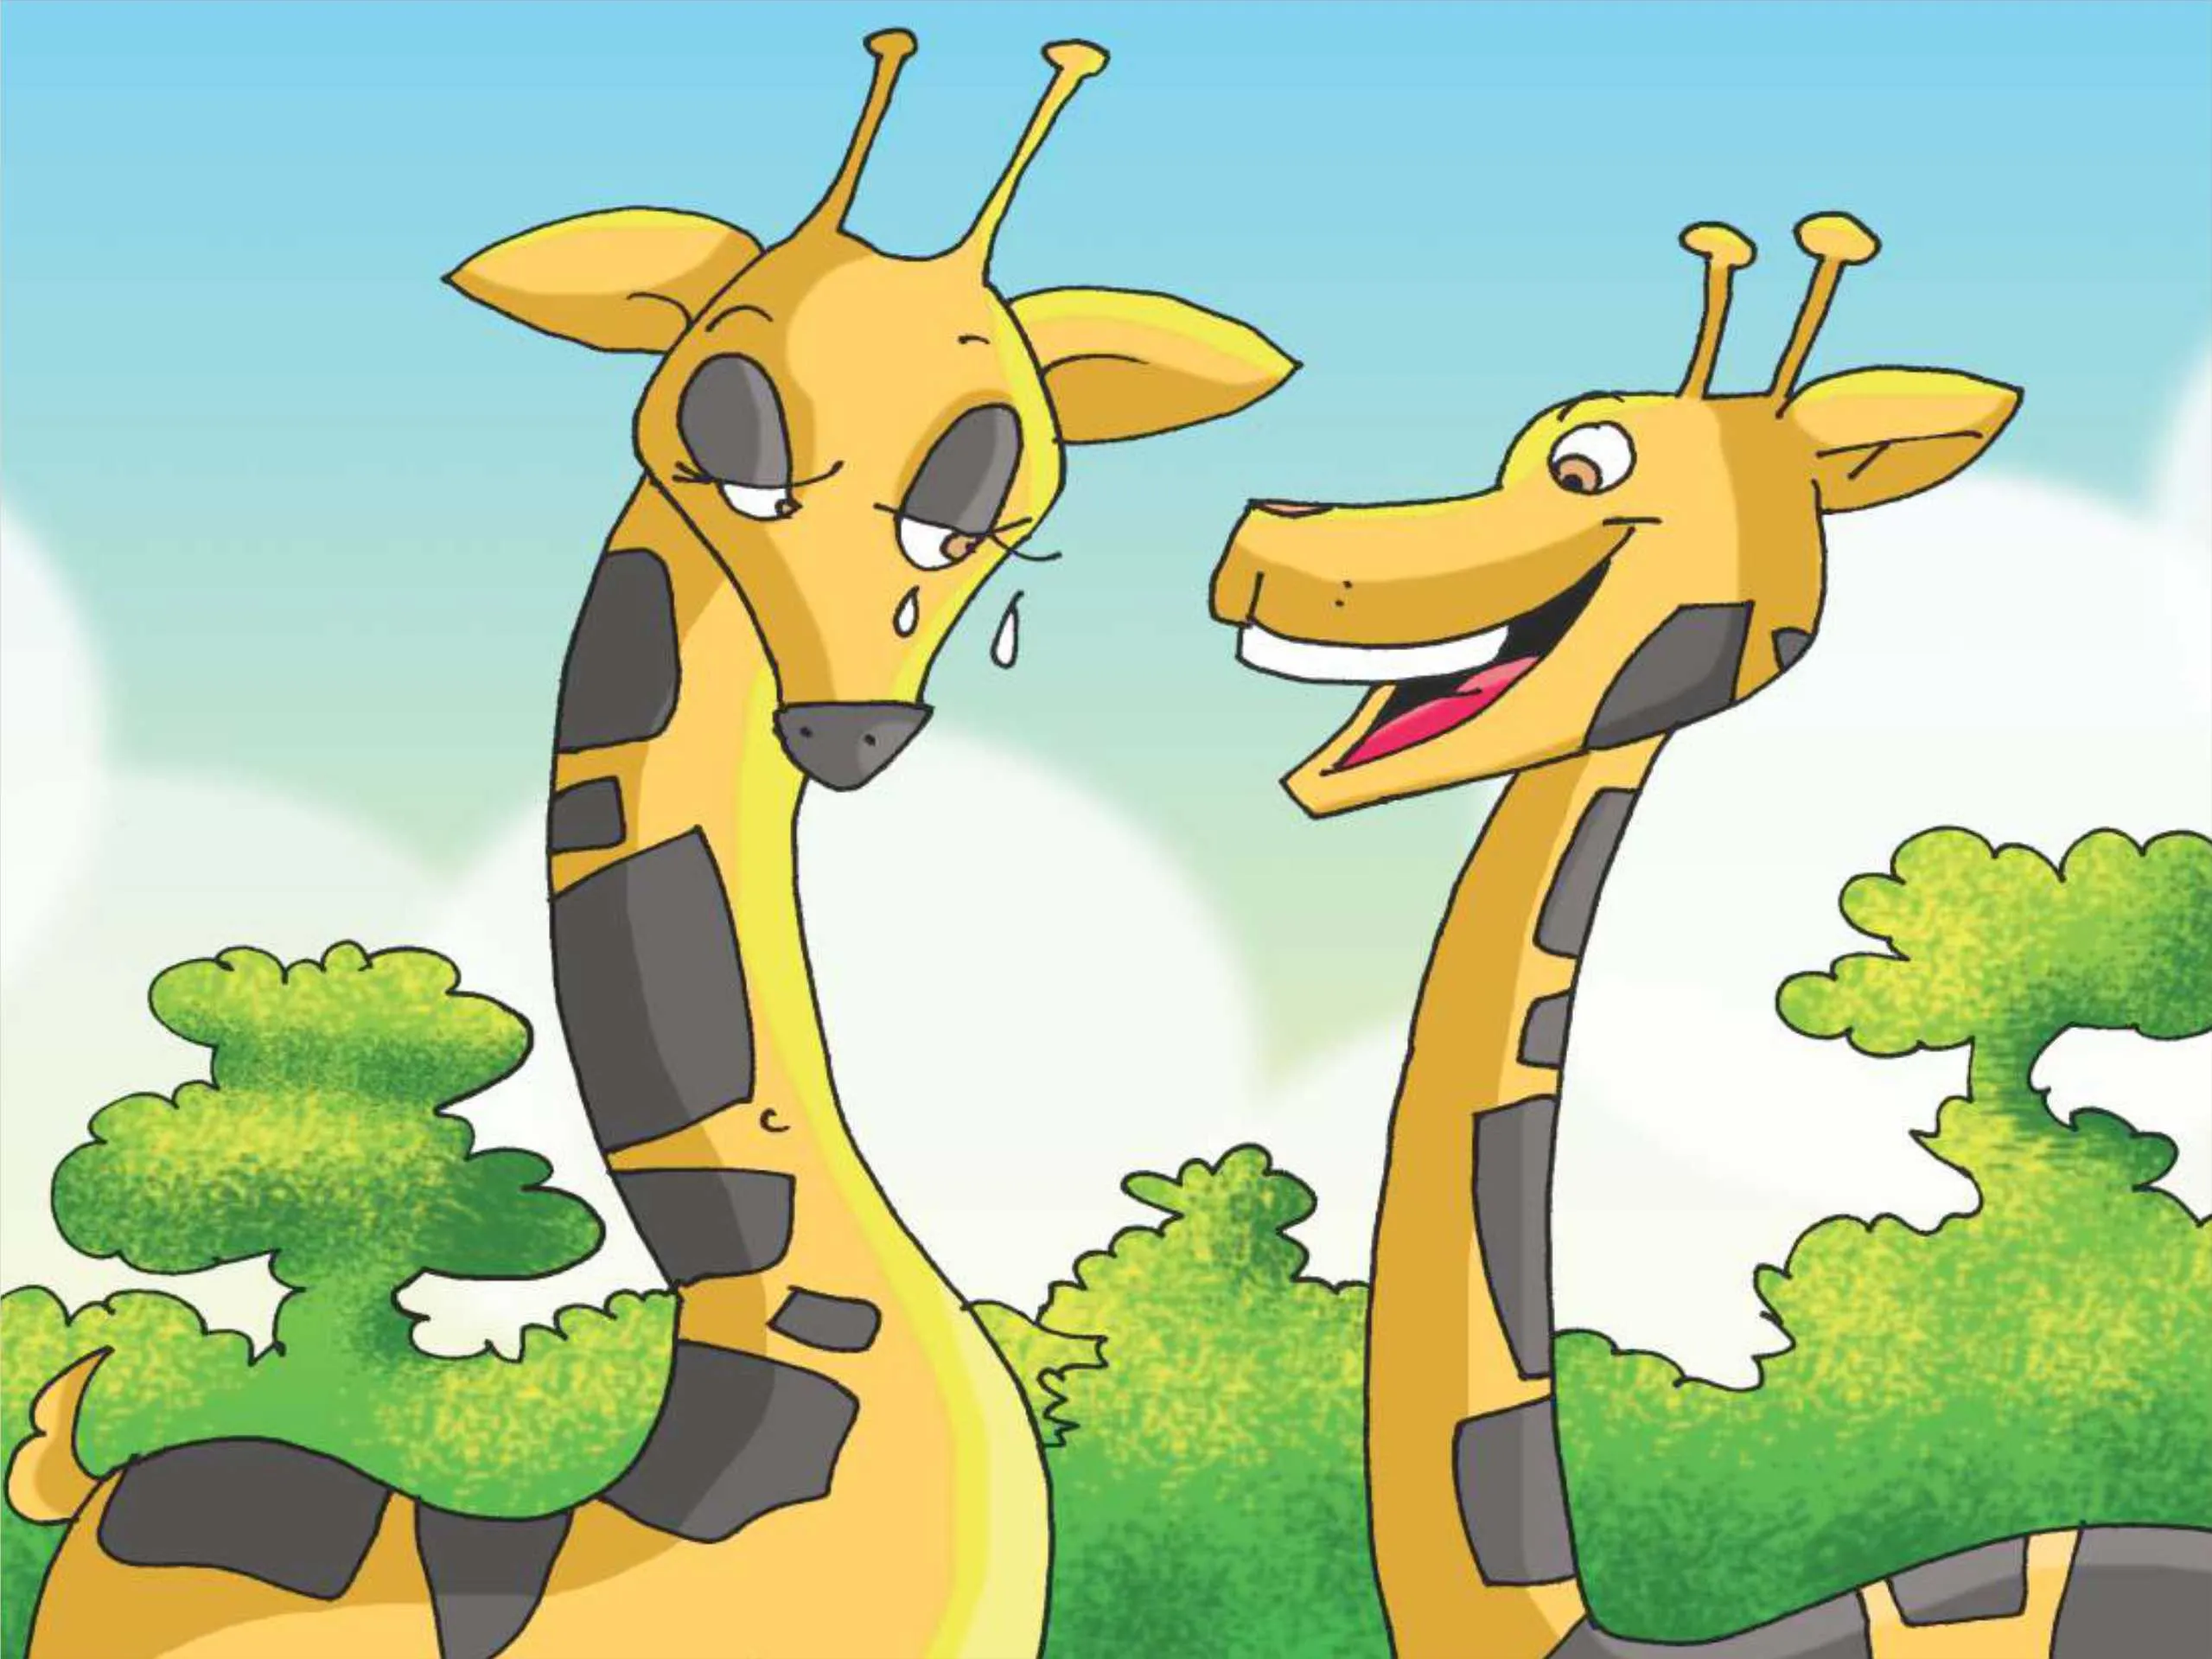 Giraffe cartoon image